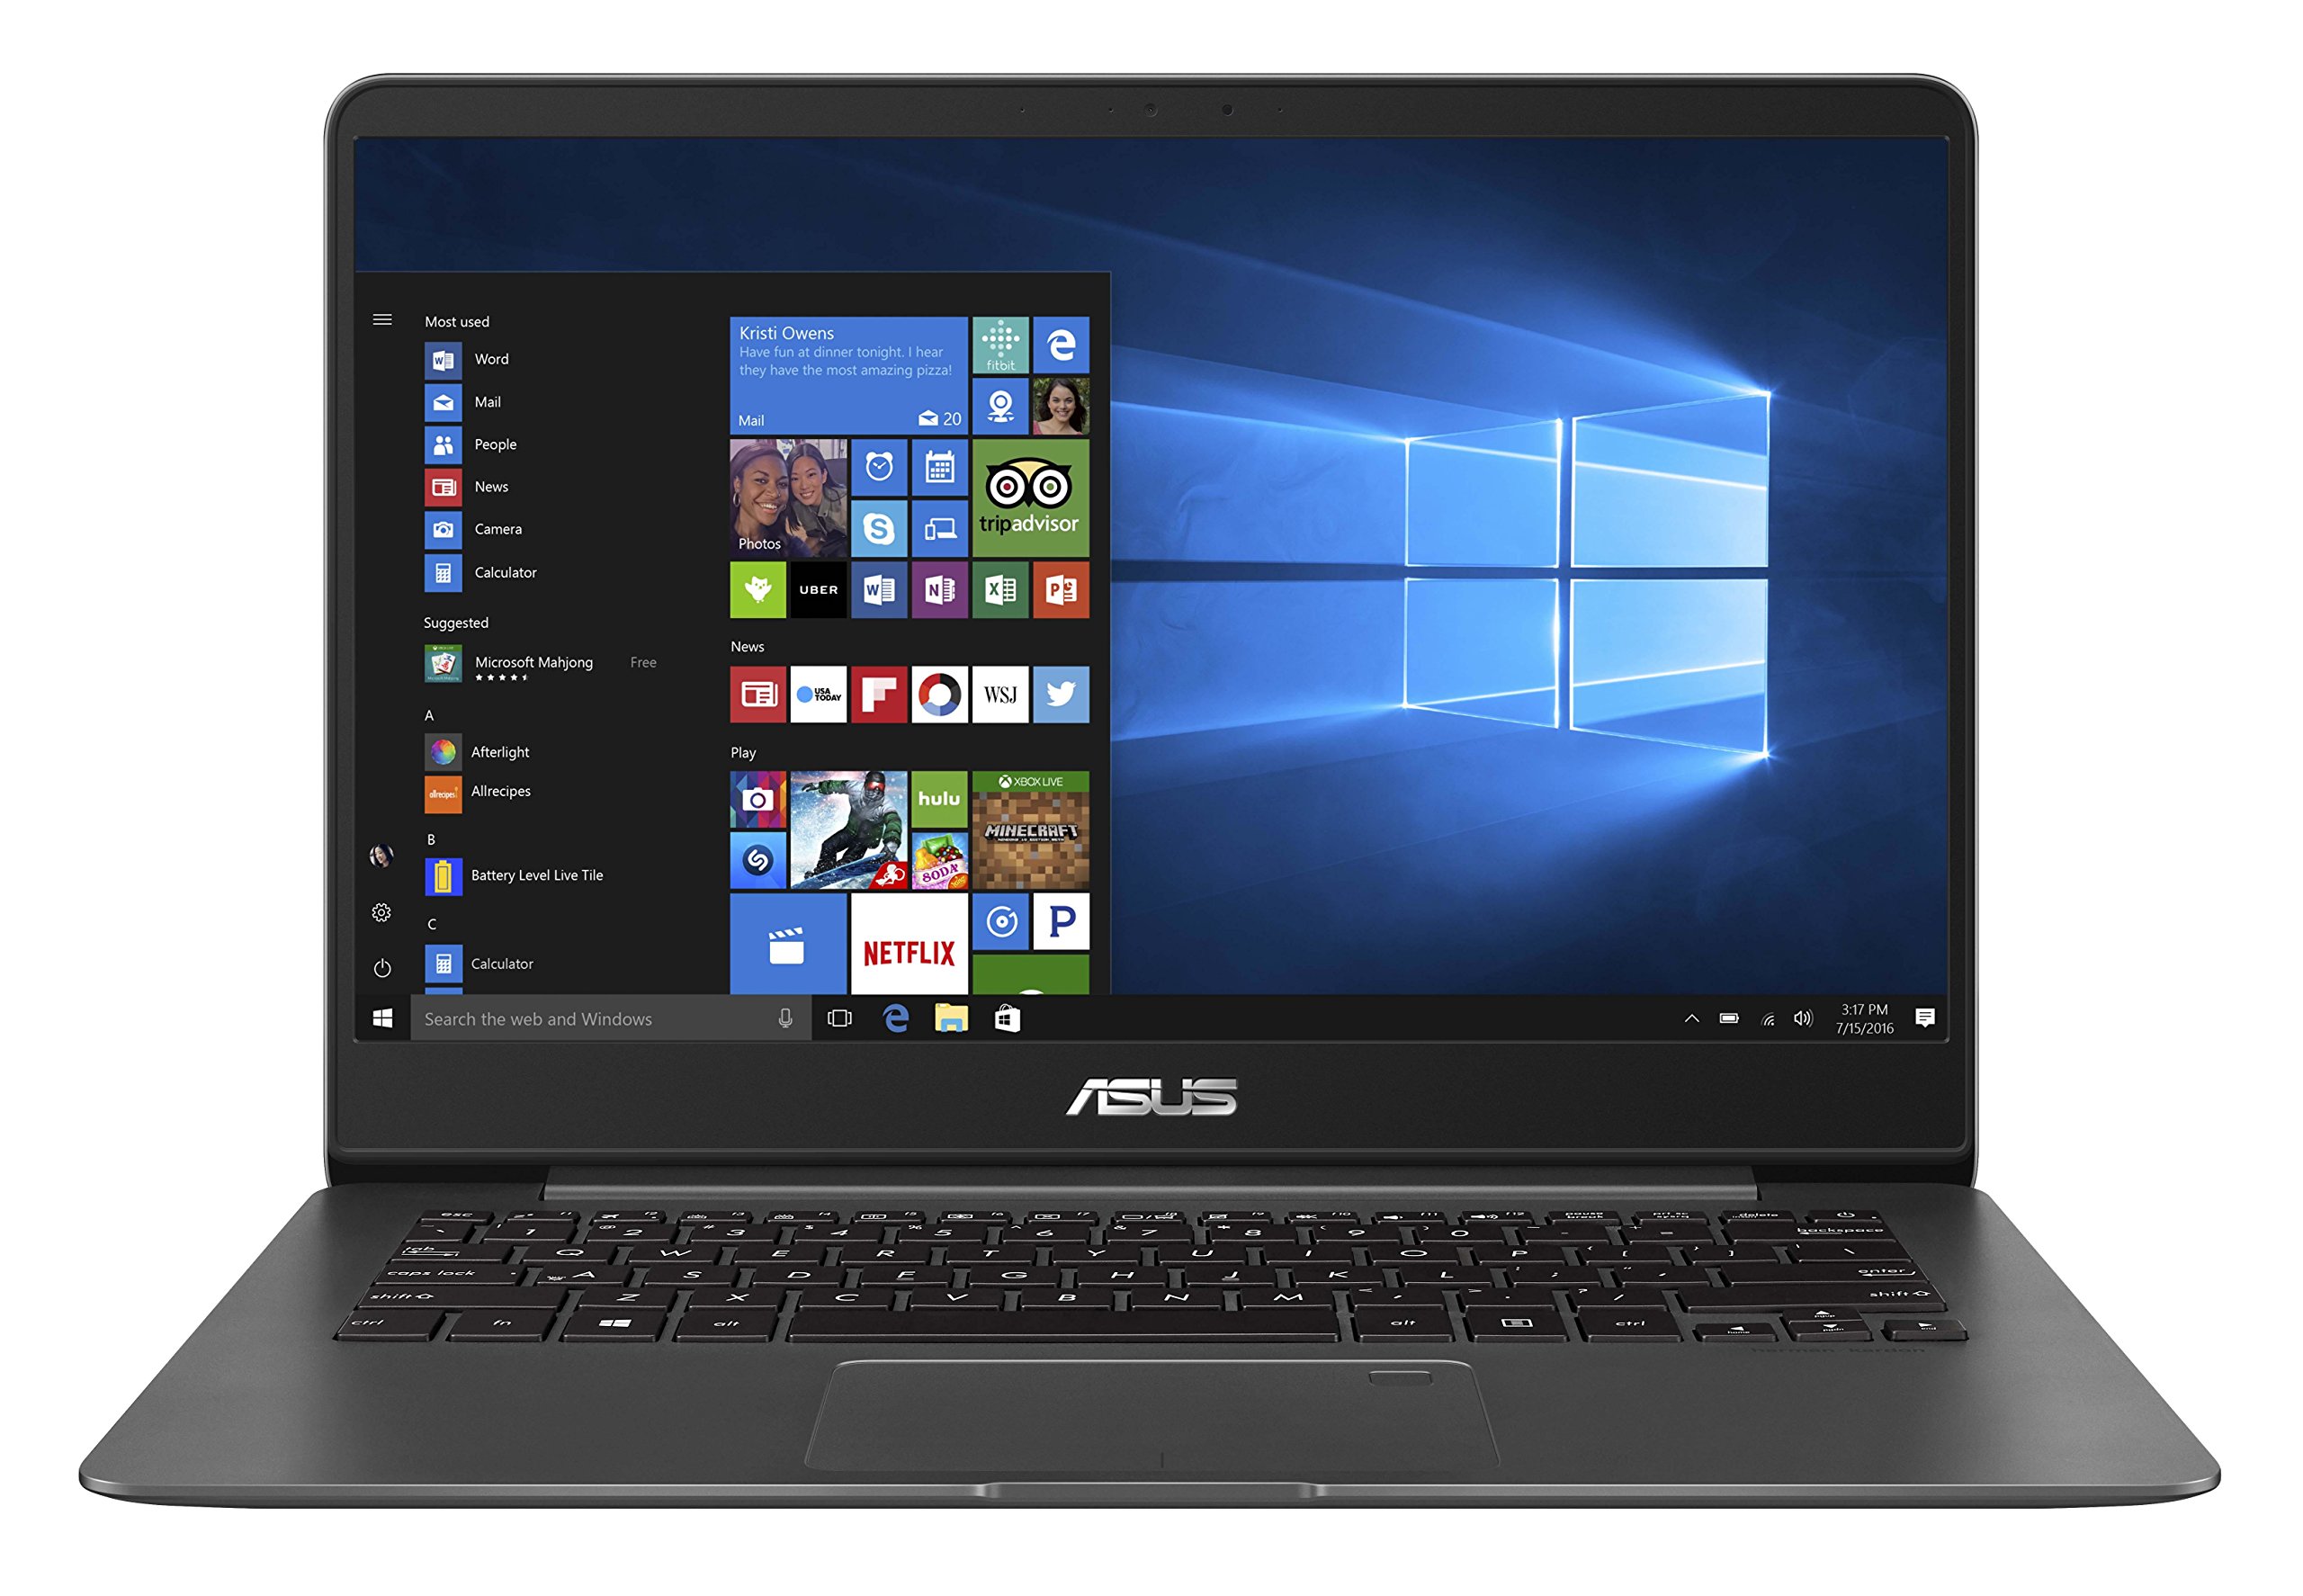 ASUS ZenBook 14 Thin and Light Laptop - 14” Full HD WideView, 8th gen Core i7-8550U Processor, 16GB DDR3, 512GB SSD, Backlit KB, Fingerprint Reader, Grey, Windows 10 Home - UX430UA-DH74